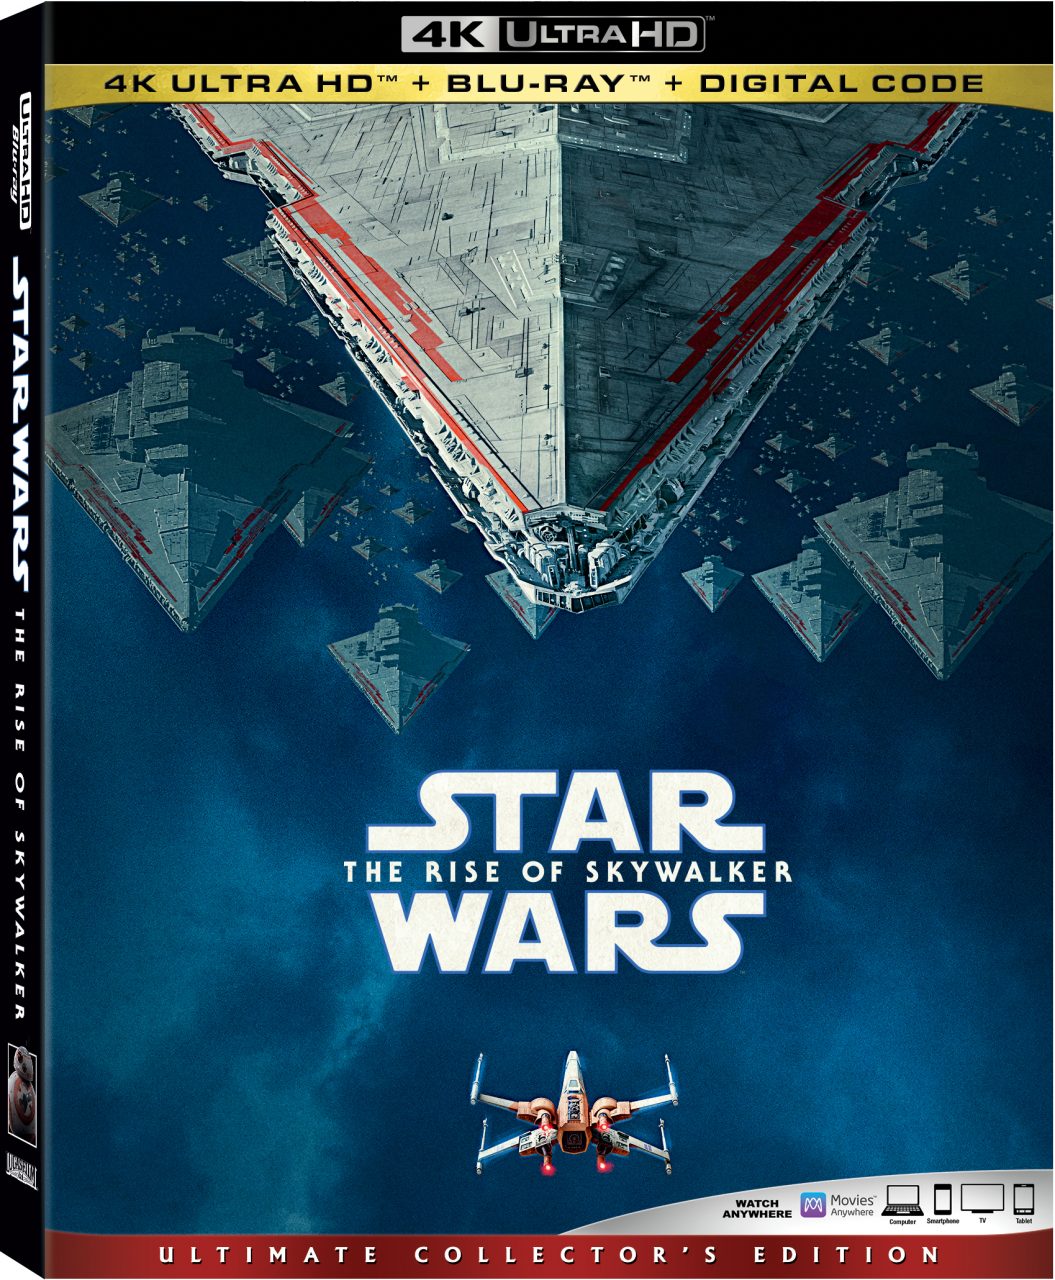 Star Wars: The Rise Of Skywalker 4K Ultra HD Combo Pack cover (Walt Disney Studios Home Entertainment/Lucasfilm)